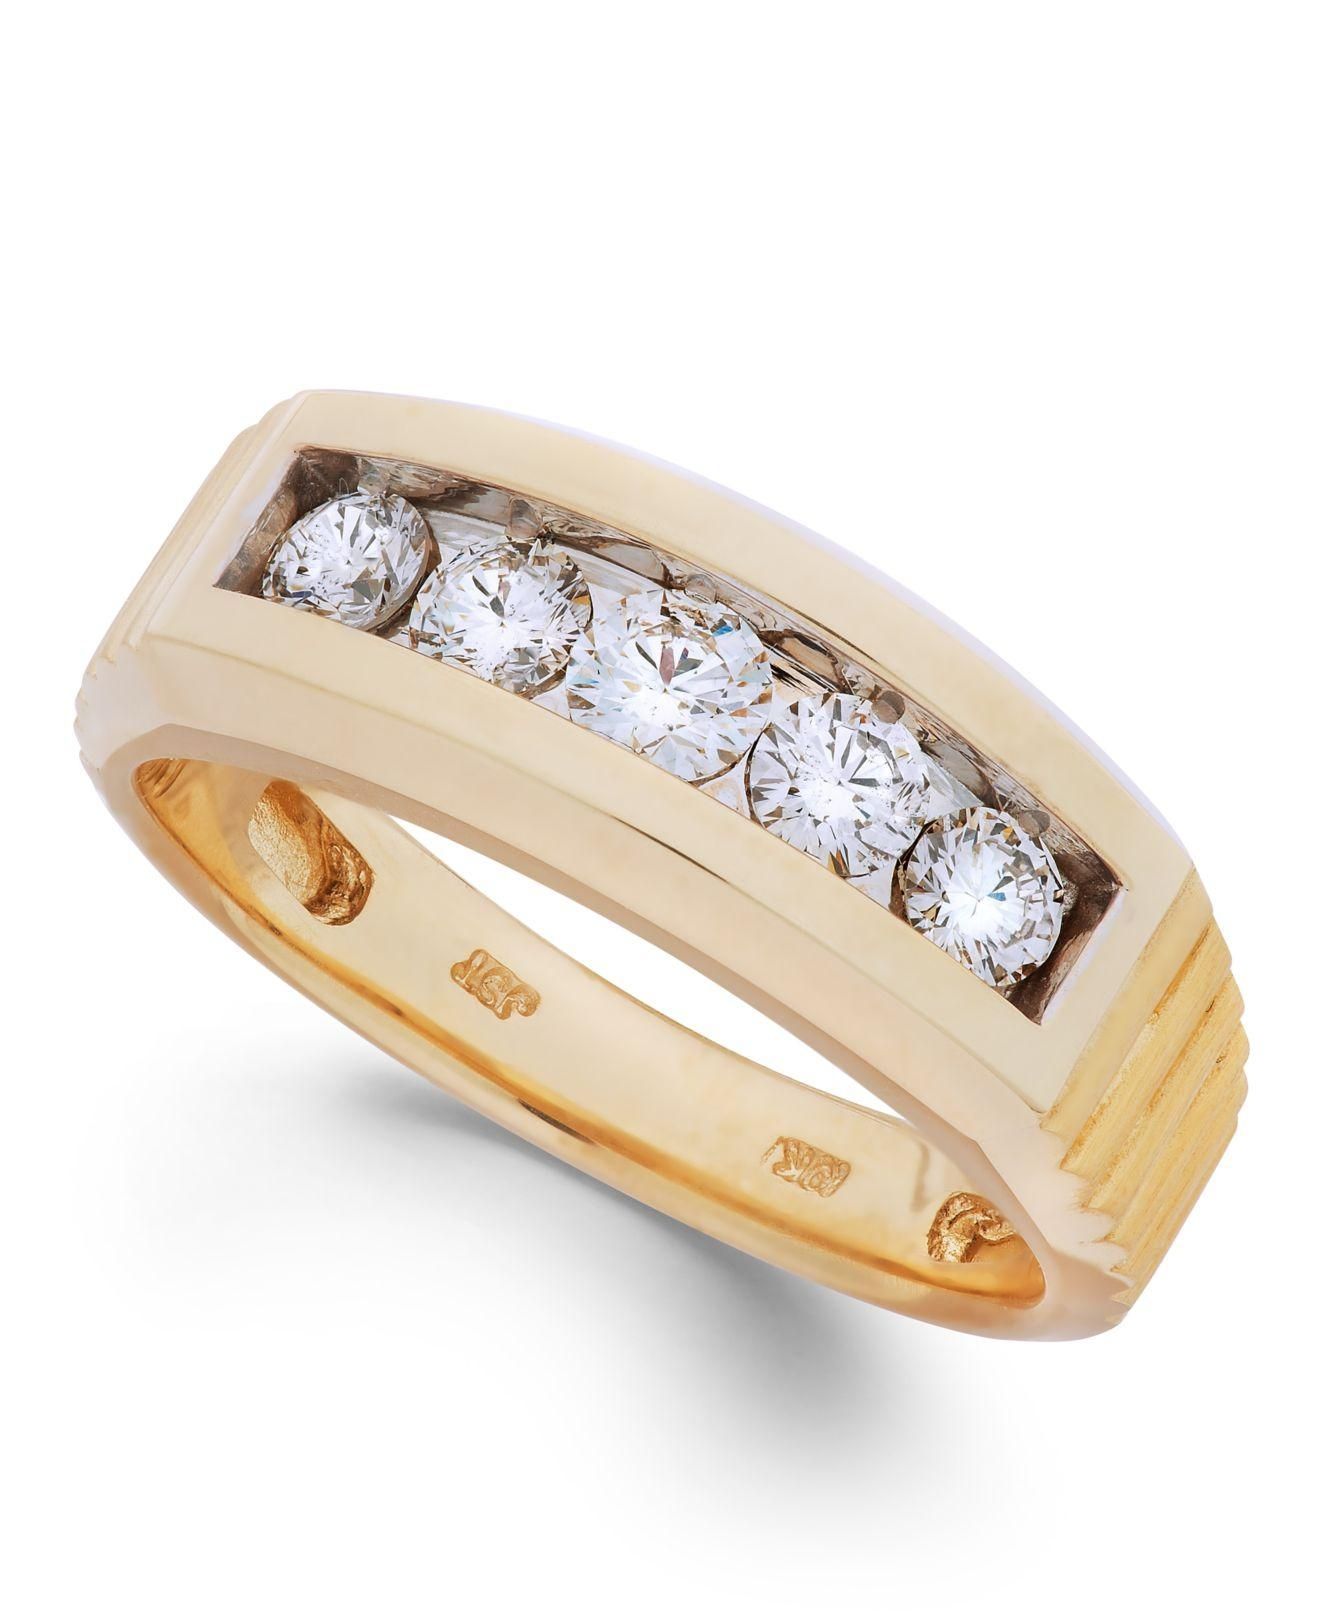 Lyst – Macy's Men's Diamond Five Stone Ring In 10k Gold (1 Ct. T.w (View 2 of 15)